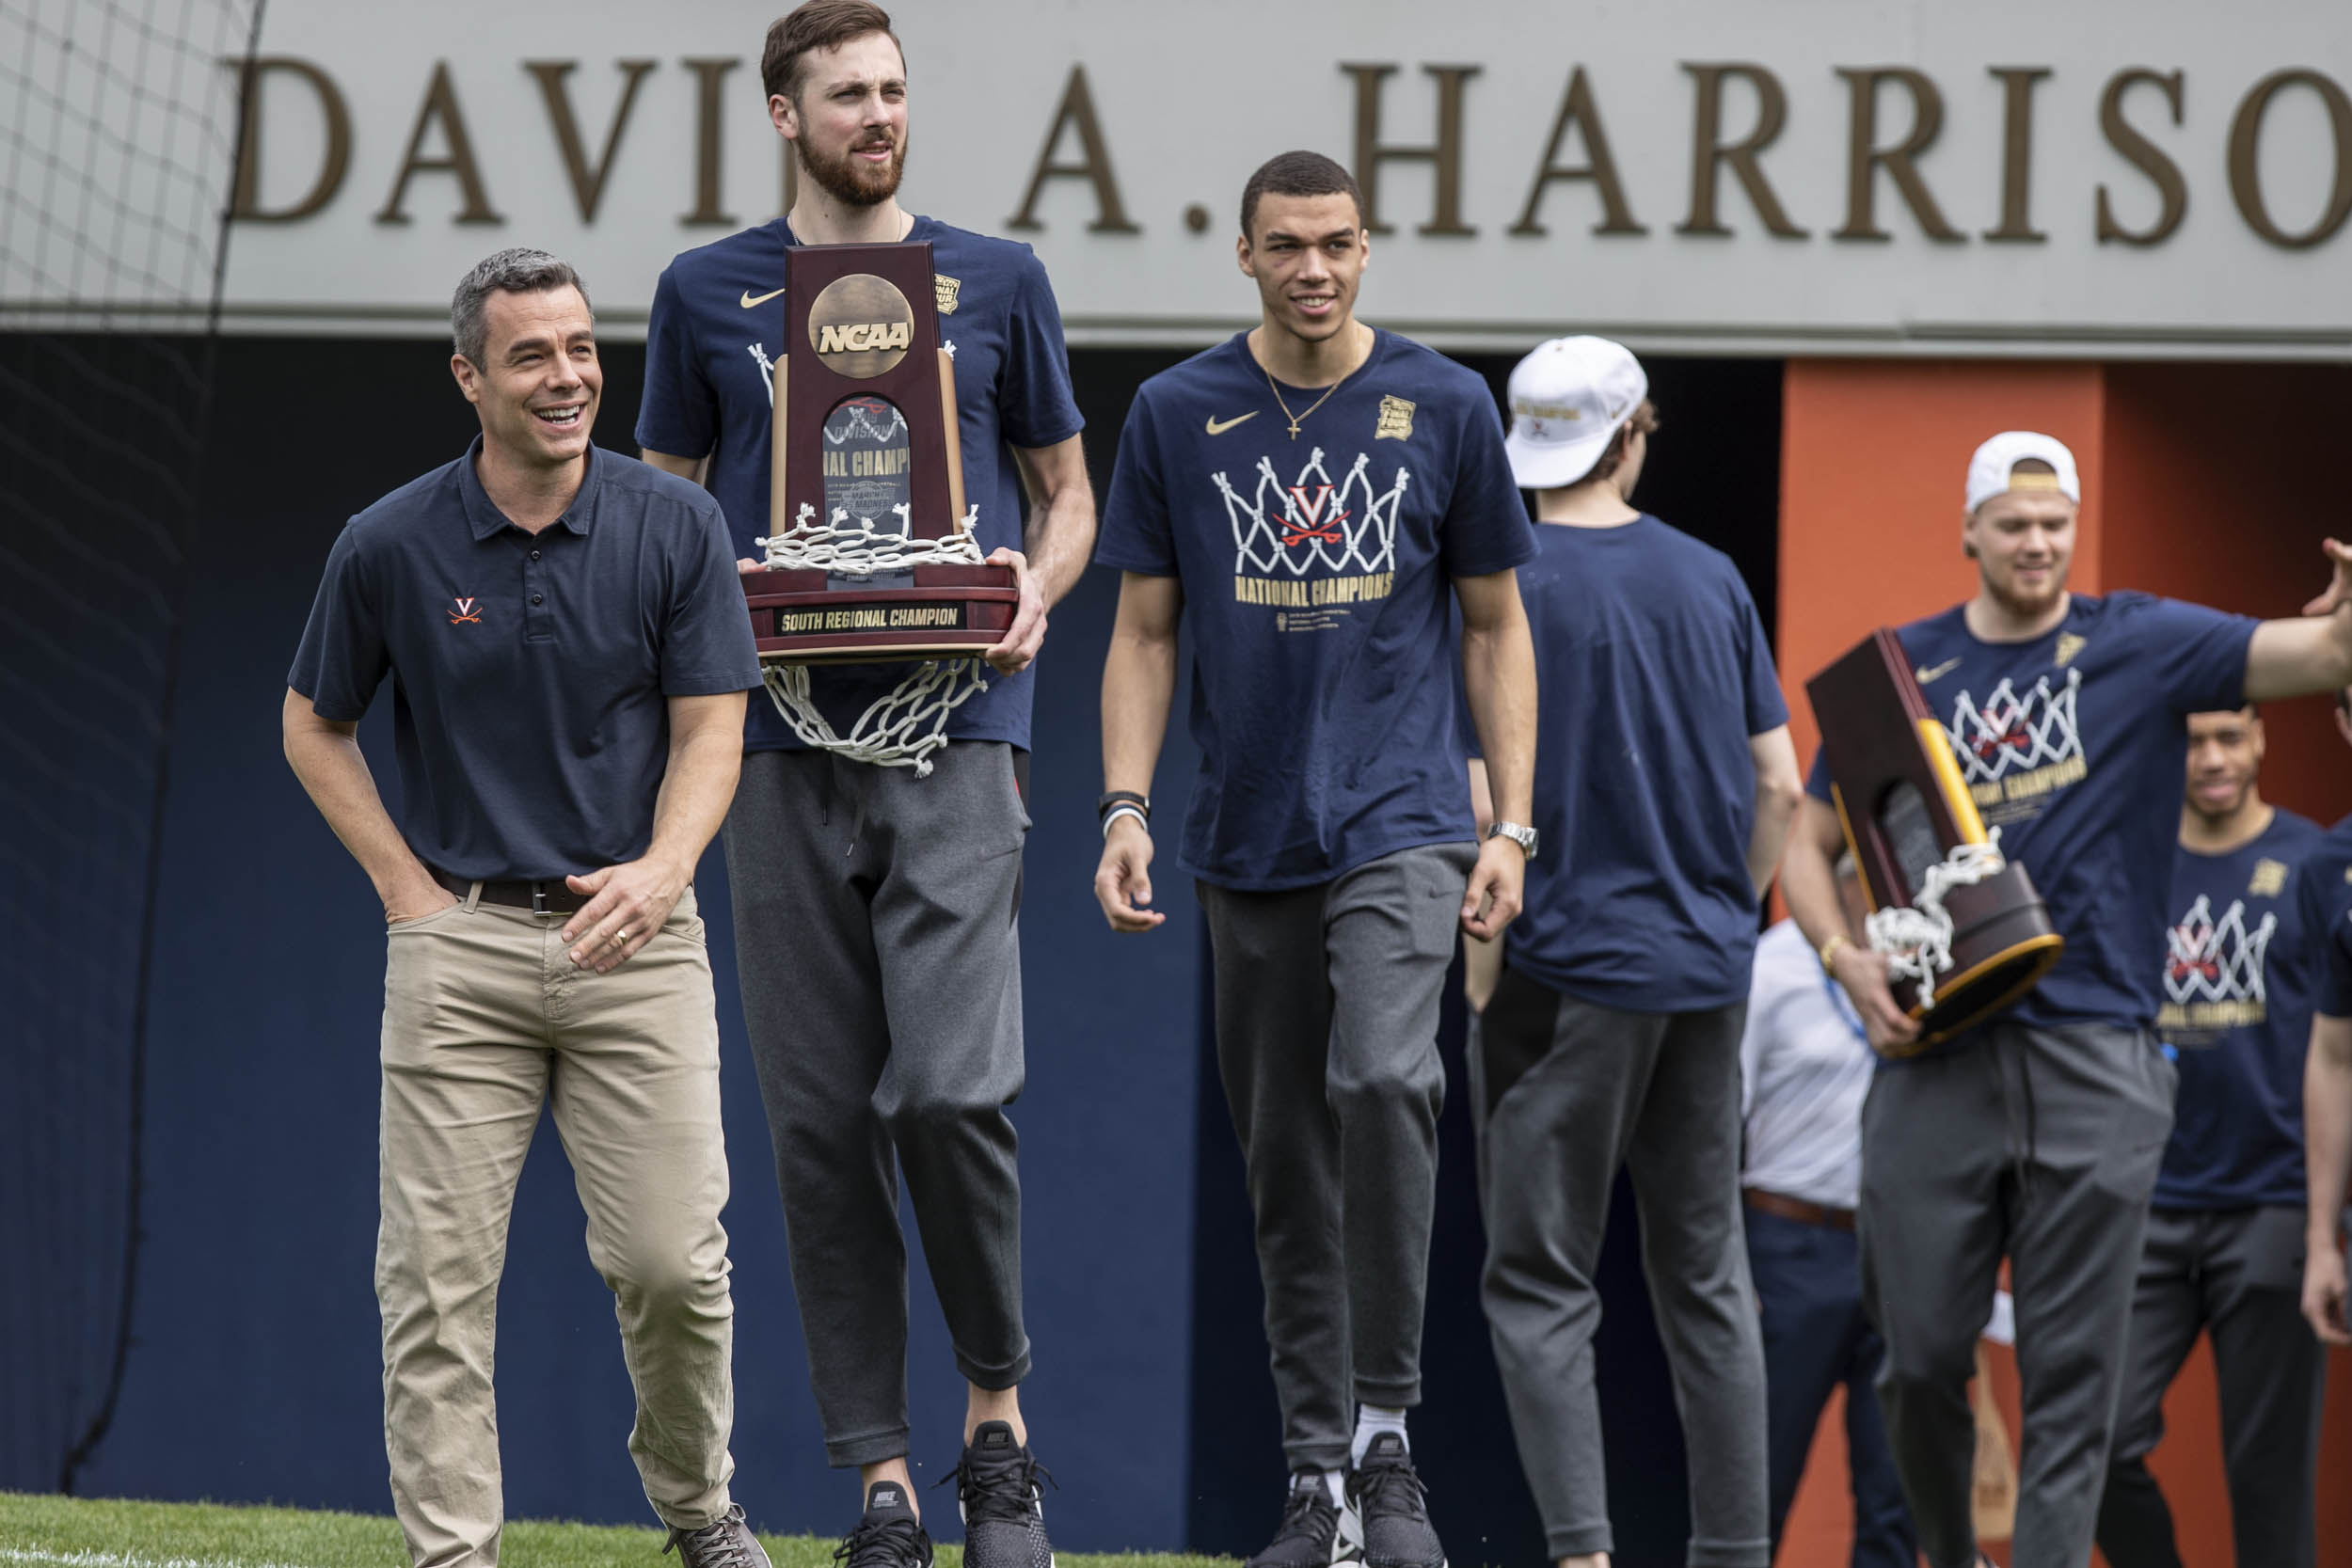 Basketball team walks into Scott stadium carrying their NCAA trophy and winning net